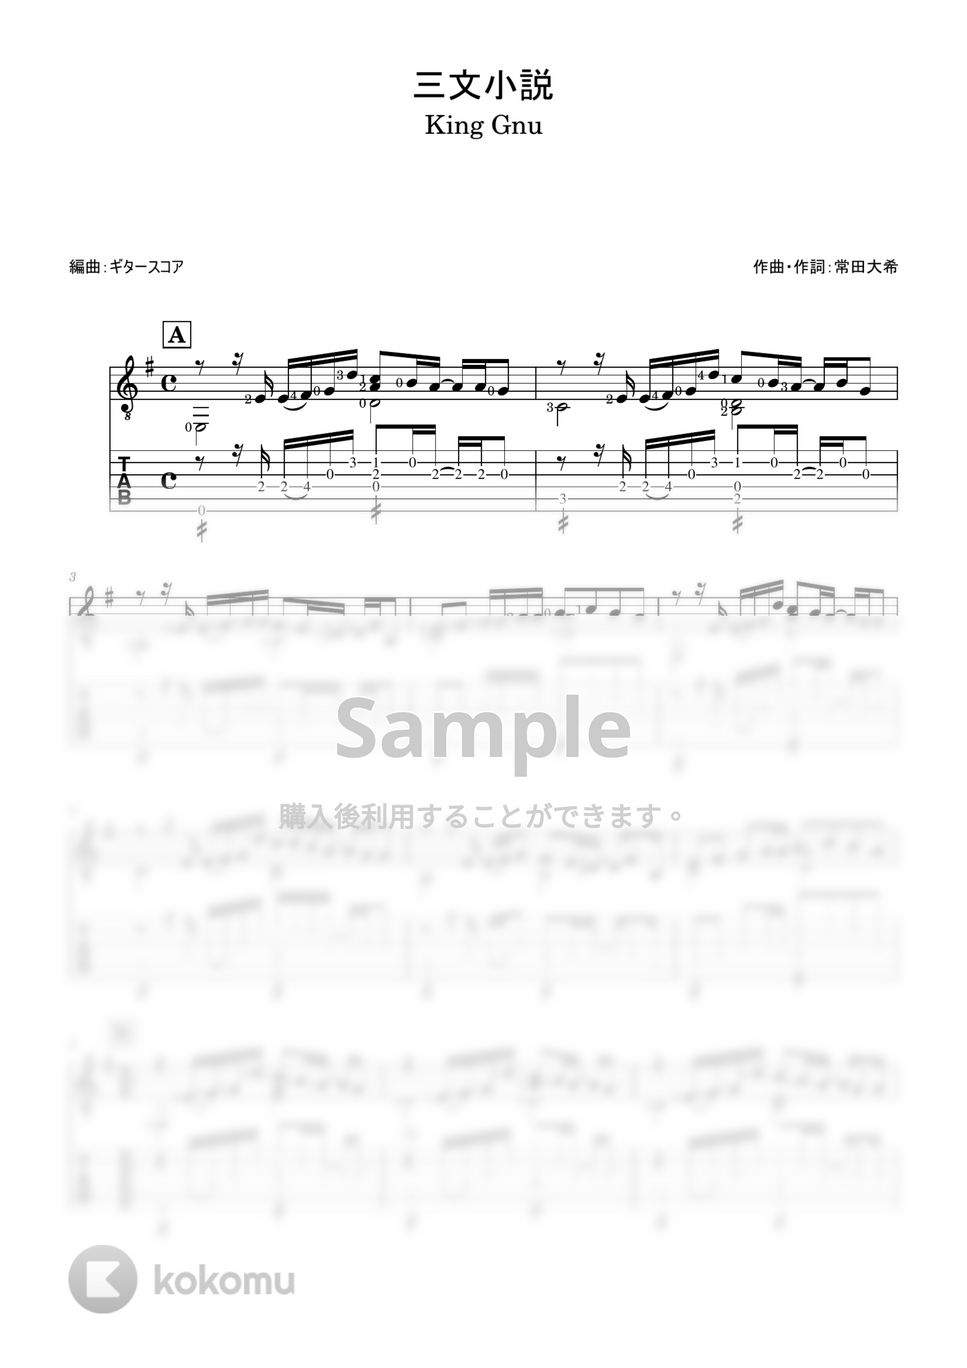 King Gnu - 三文小説 (ギター・ソロ用・tab付き) by ギタースコア